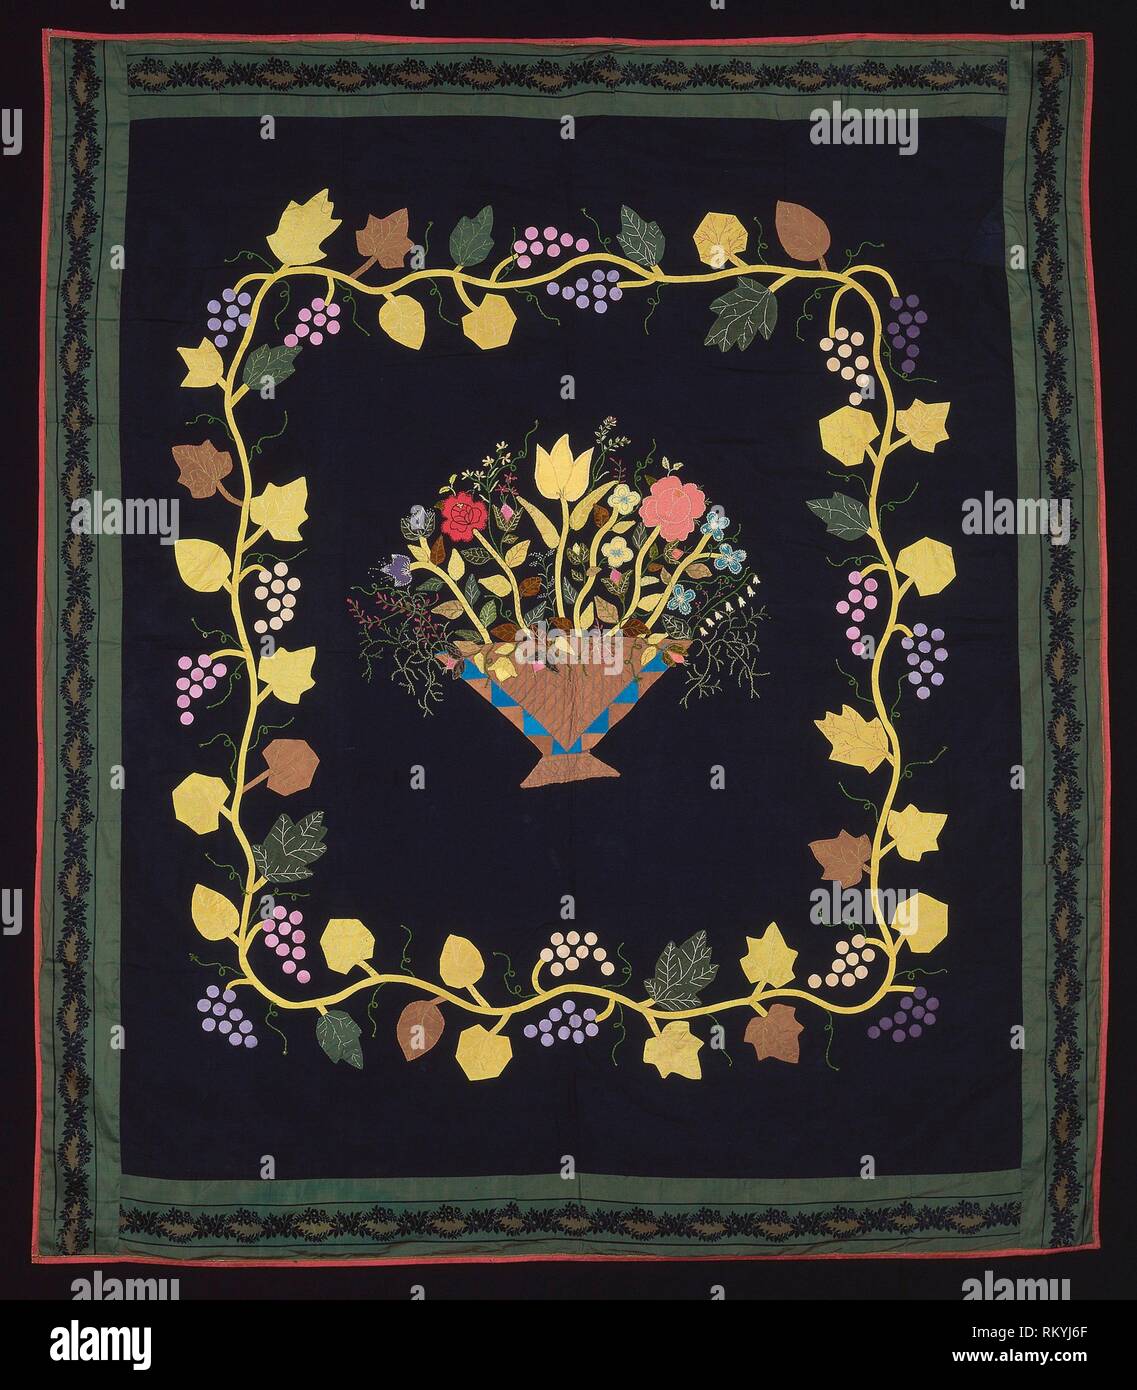 Handtücherwechsel (Korb mit Blumen Quilt) - c. 1860 - Für die Brücken  Familie Usa, Kentucky, Lexington- Herkunft: Kentucky, Datum: 1850 - 1870  Stockfotografie - Alamy